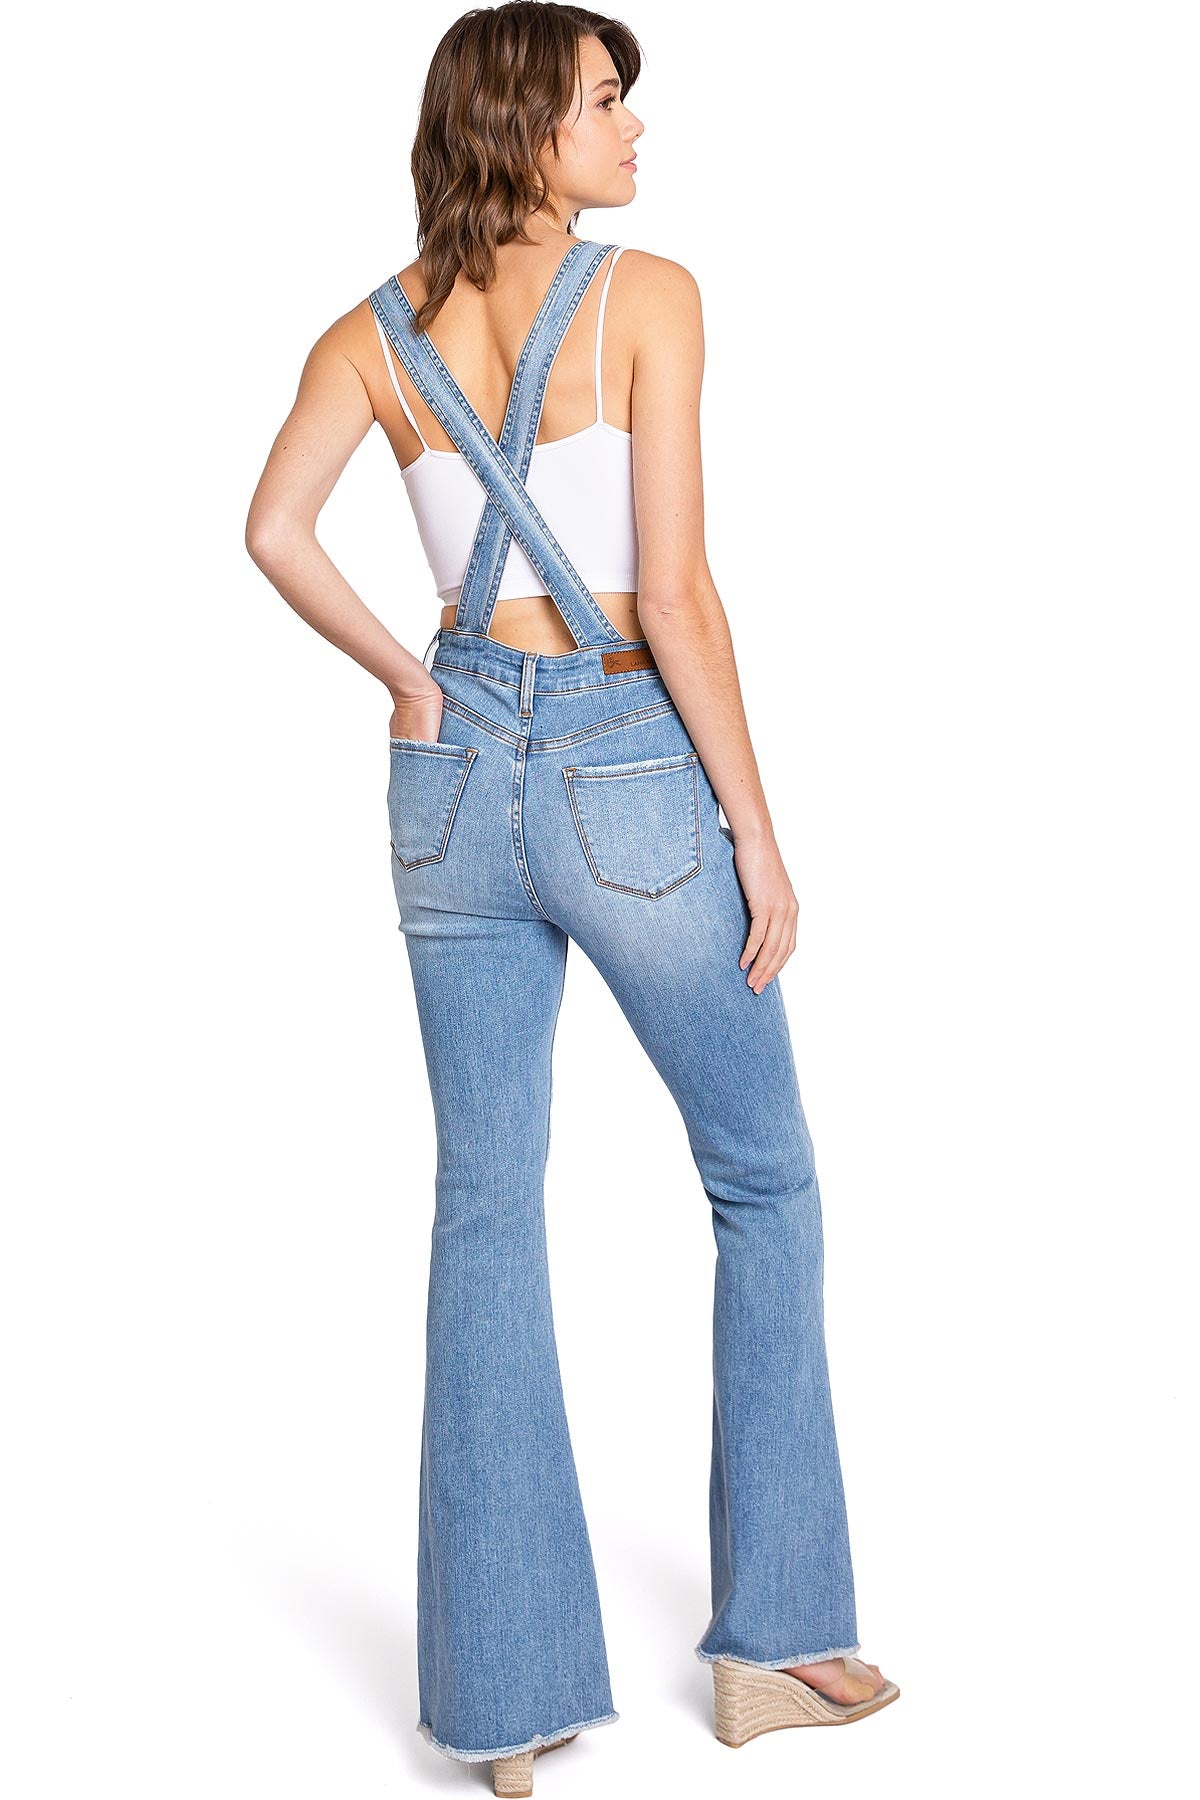 Lana Roux Star Print Zipper Denim Flare Overalls